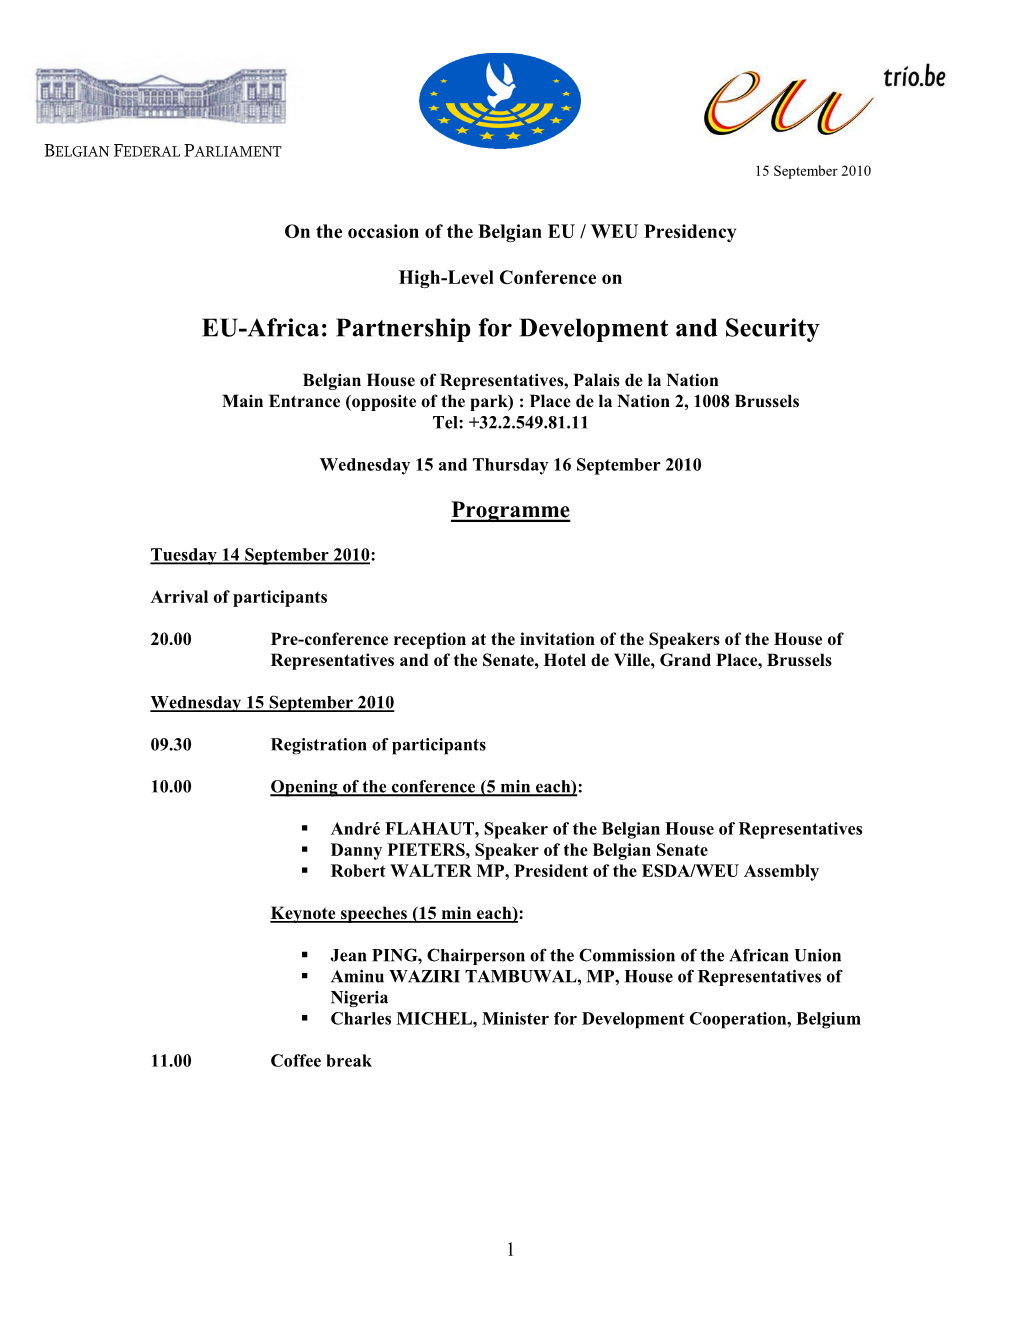 EU-Africa: Partnership for Development and Security